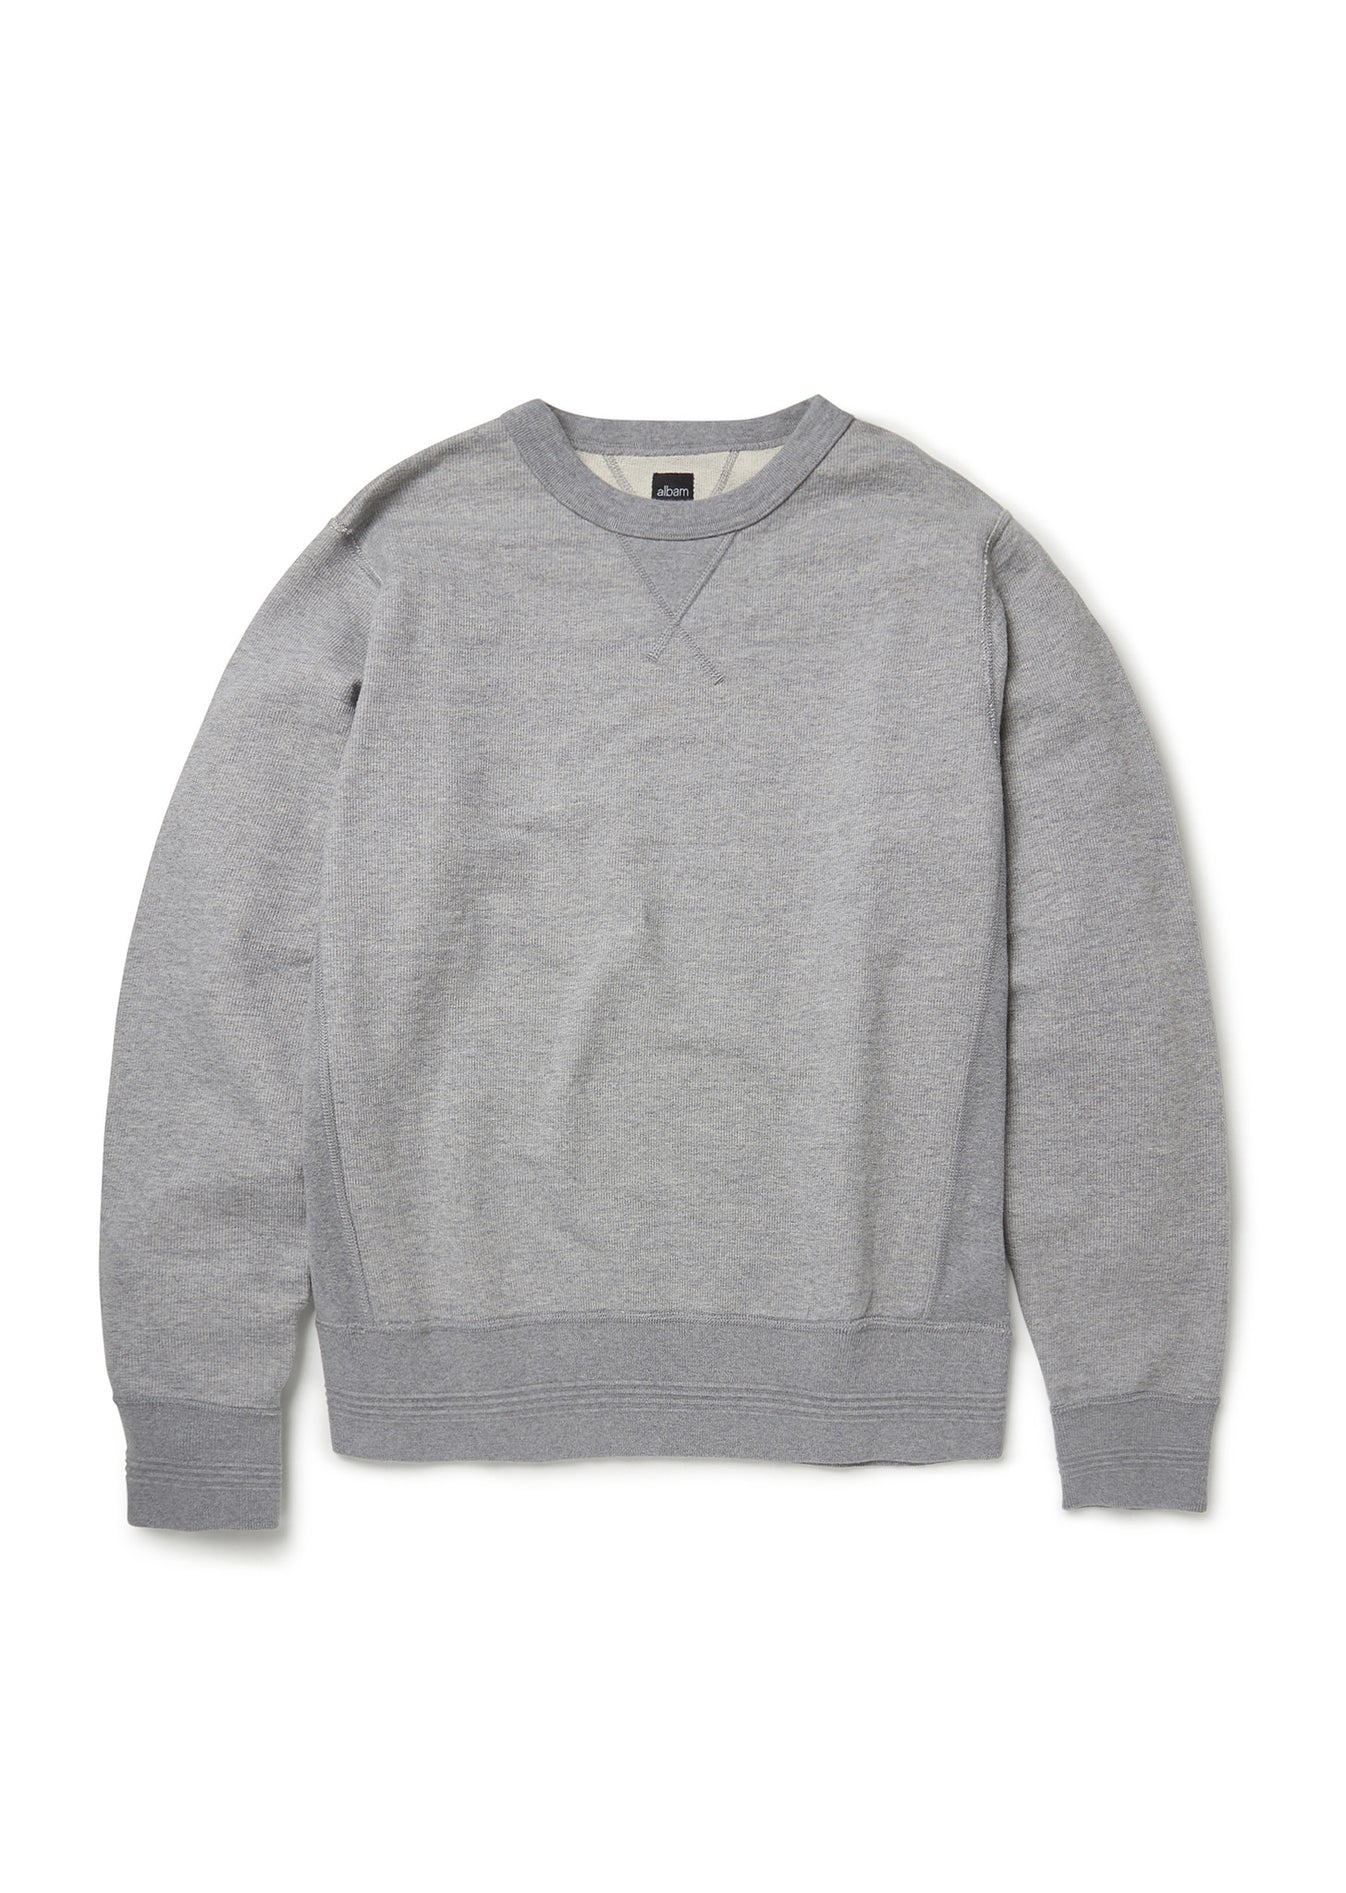 albam Clothing Sweatshirt in Grey Marl